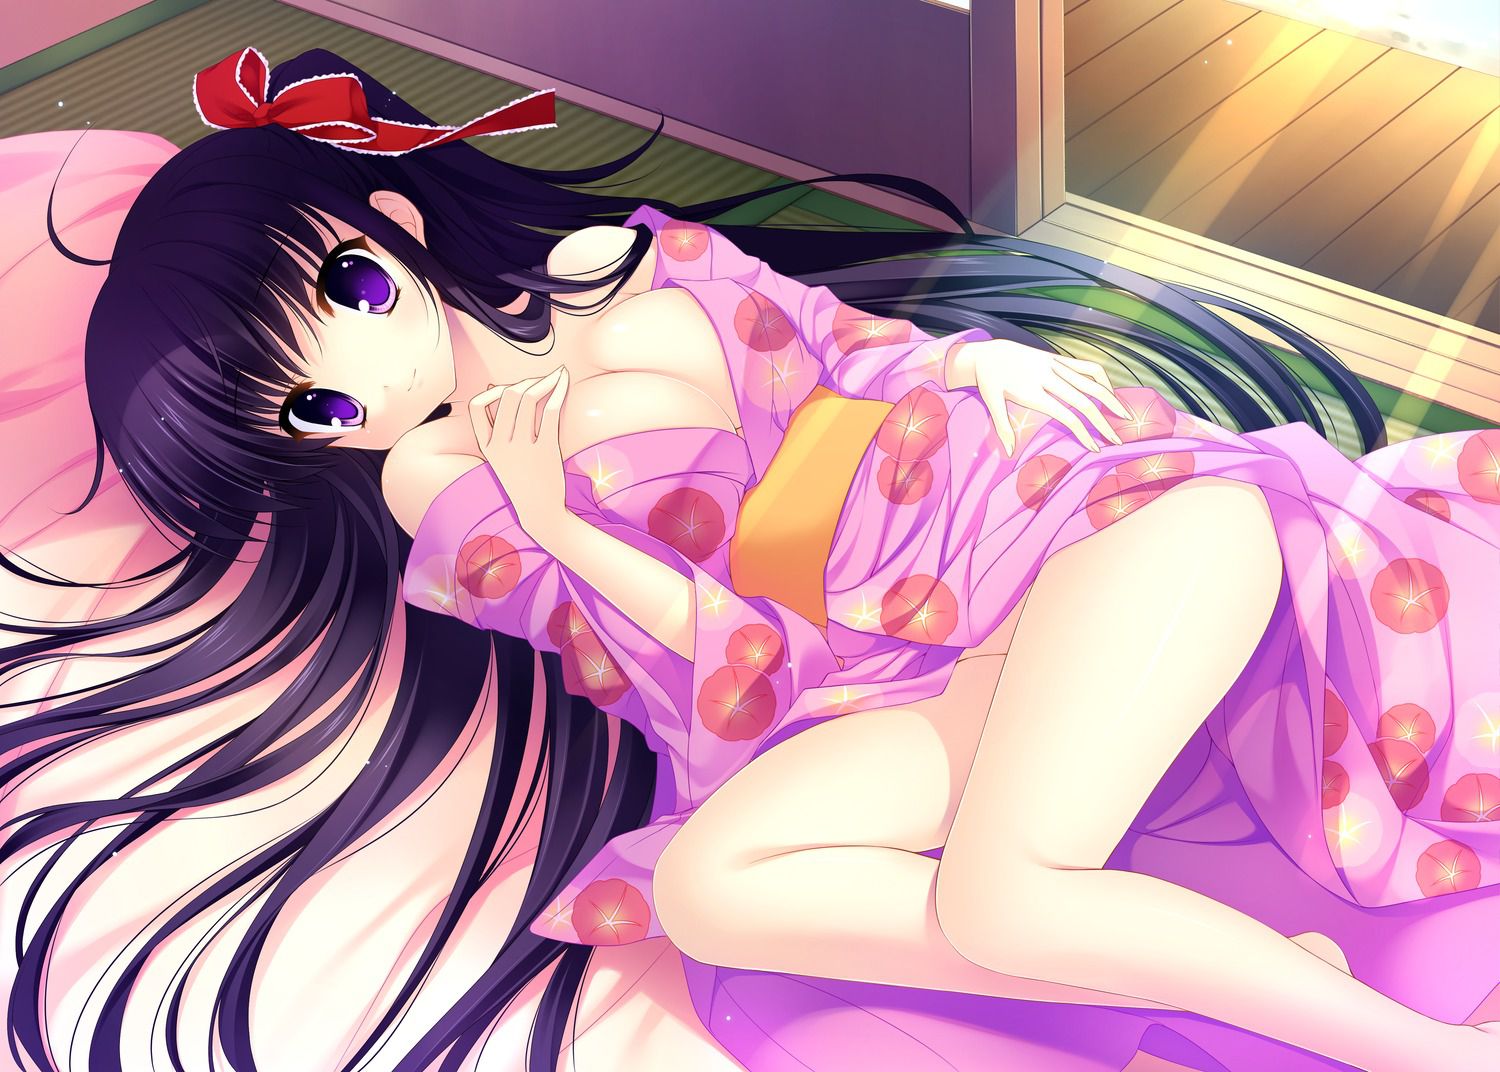 Yuyukana [18 PC Bishoujo game CG] erotic wallpapers and pictures part 3 4